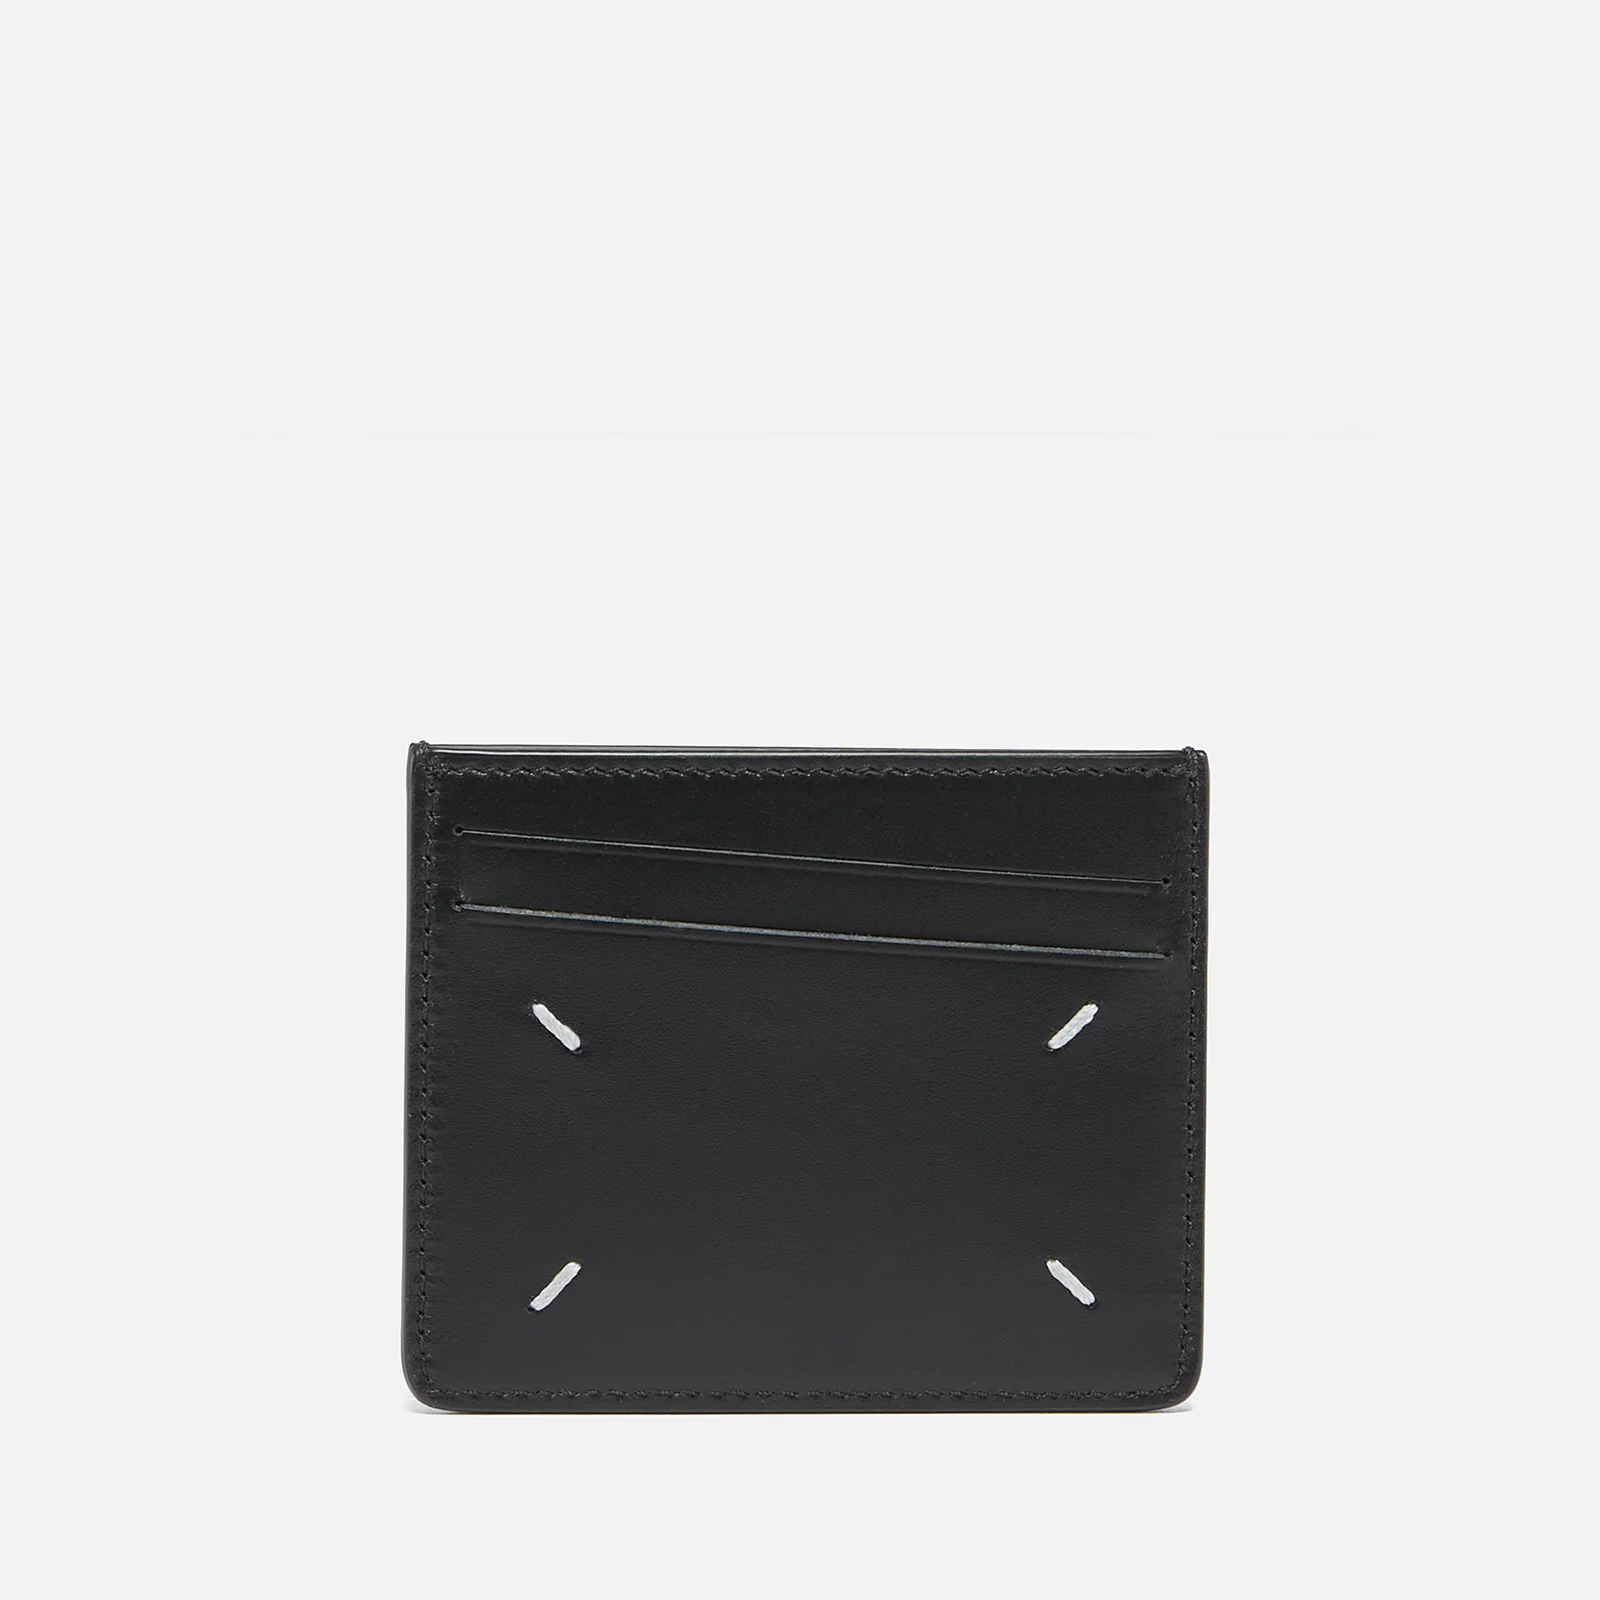 Maison Margiela Men's 5-Slot Smooth Leather Card Holder - Black Image 1